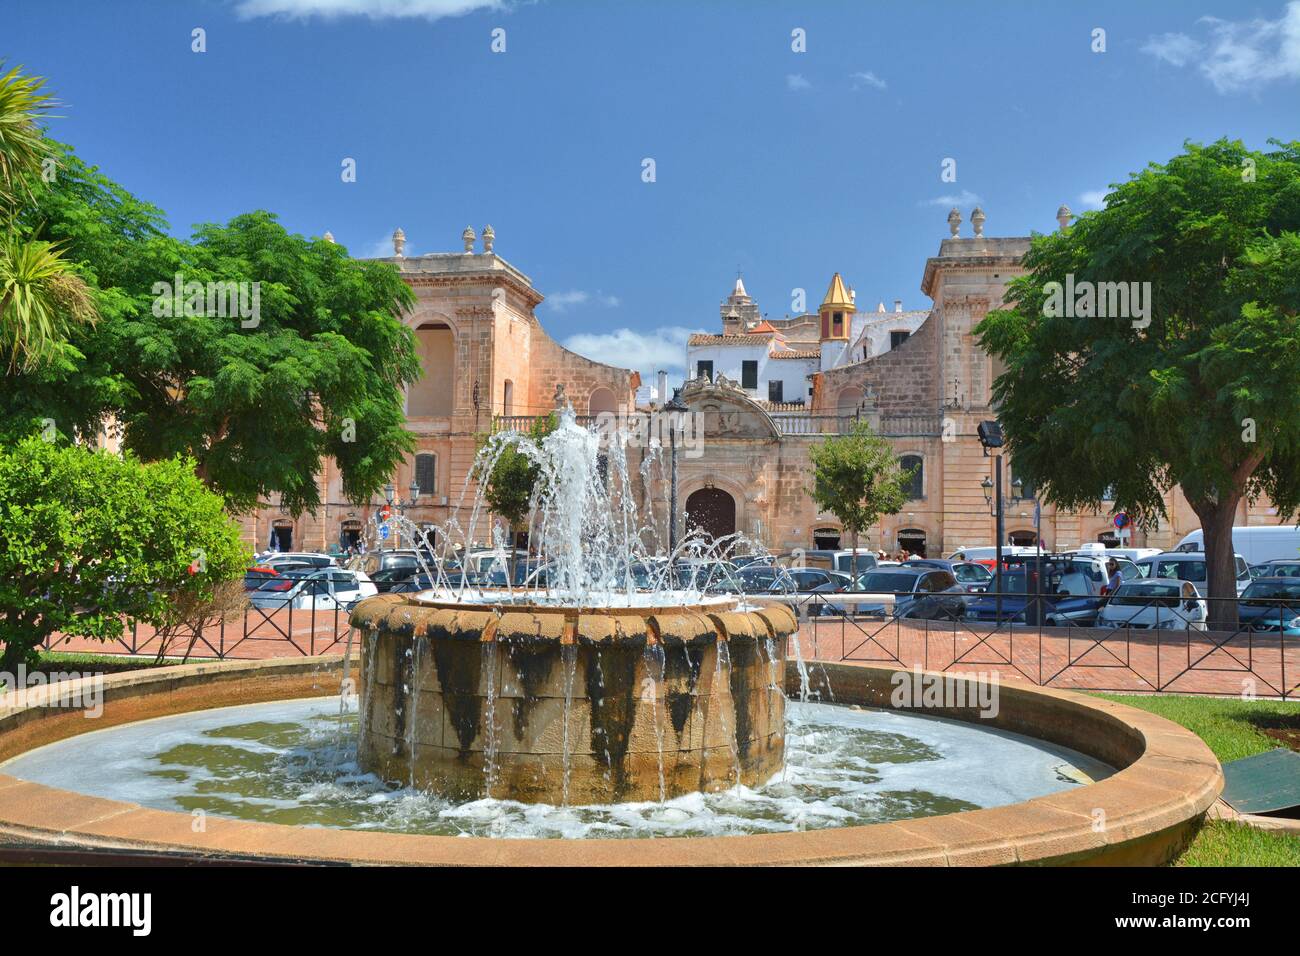 Ciutadella, Menorca, Espagne - 14 août 2018 : Fontaine sur la place de la ville Placa des Born in Ciutadella de Menorca. Banque D'Images